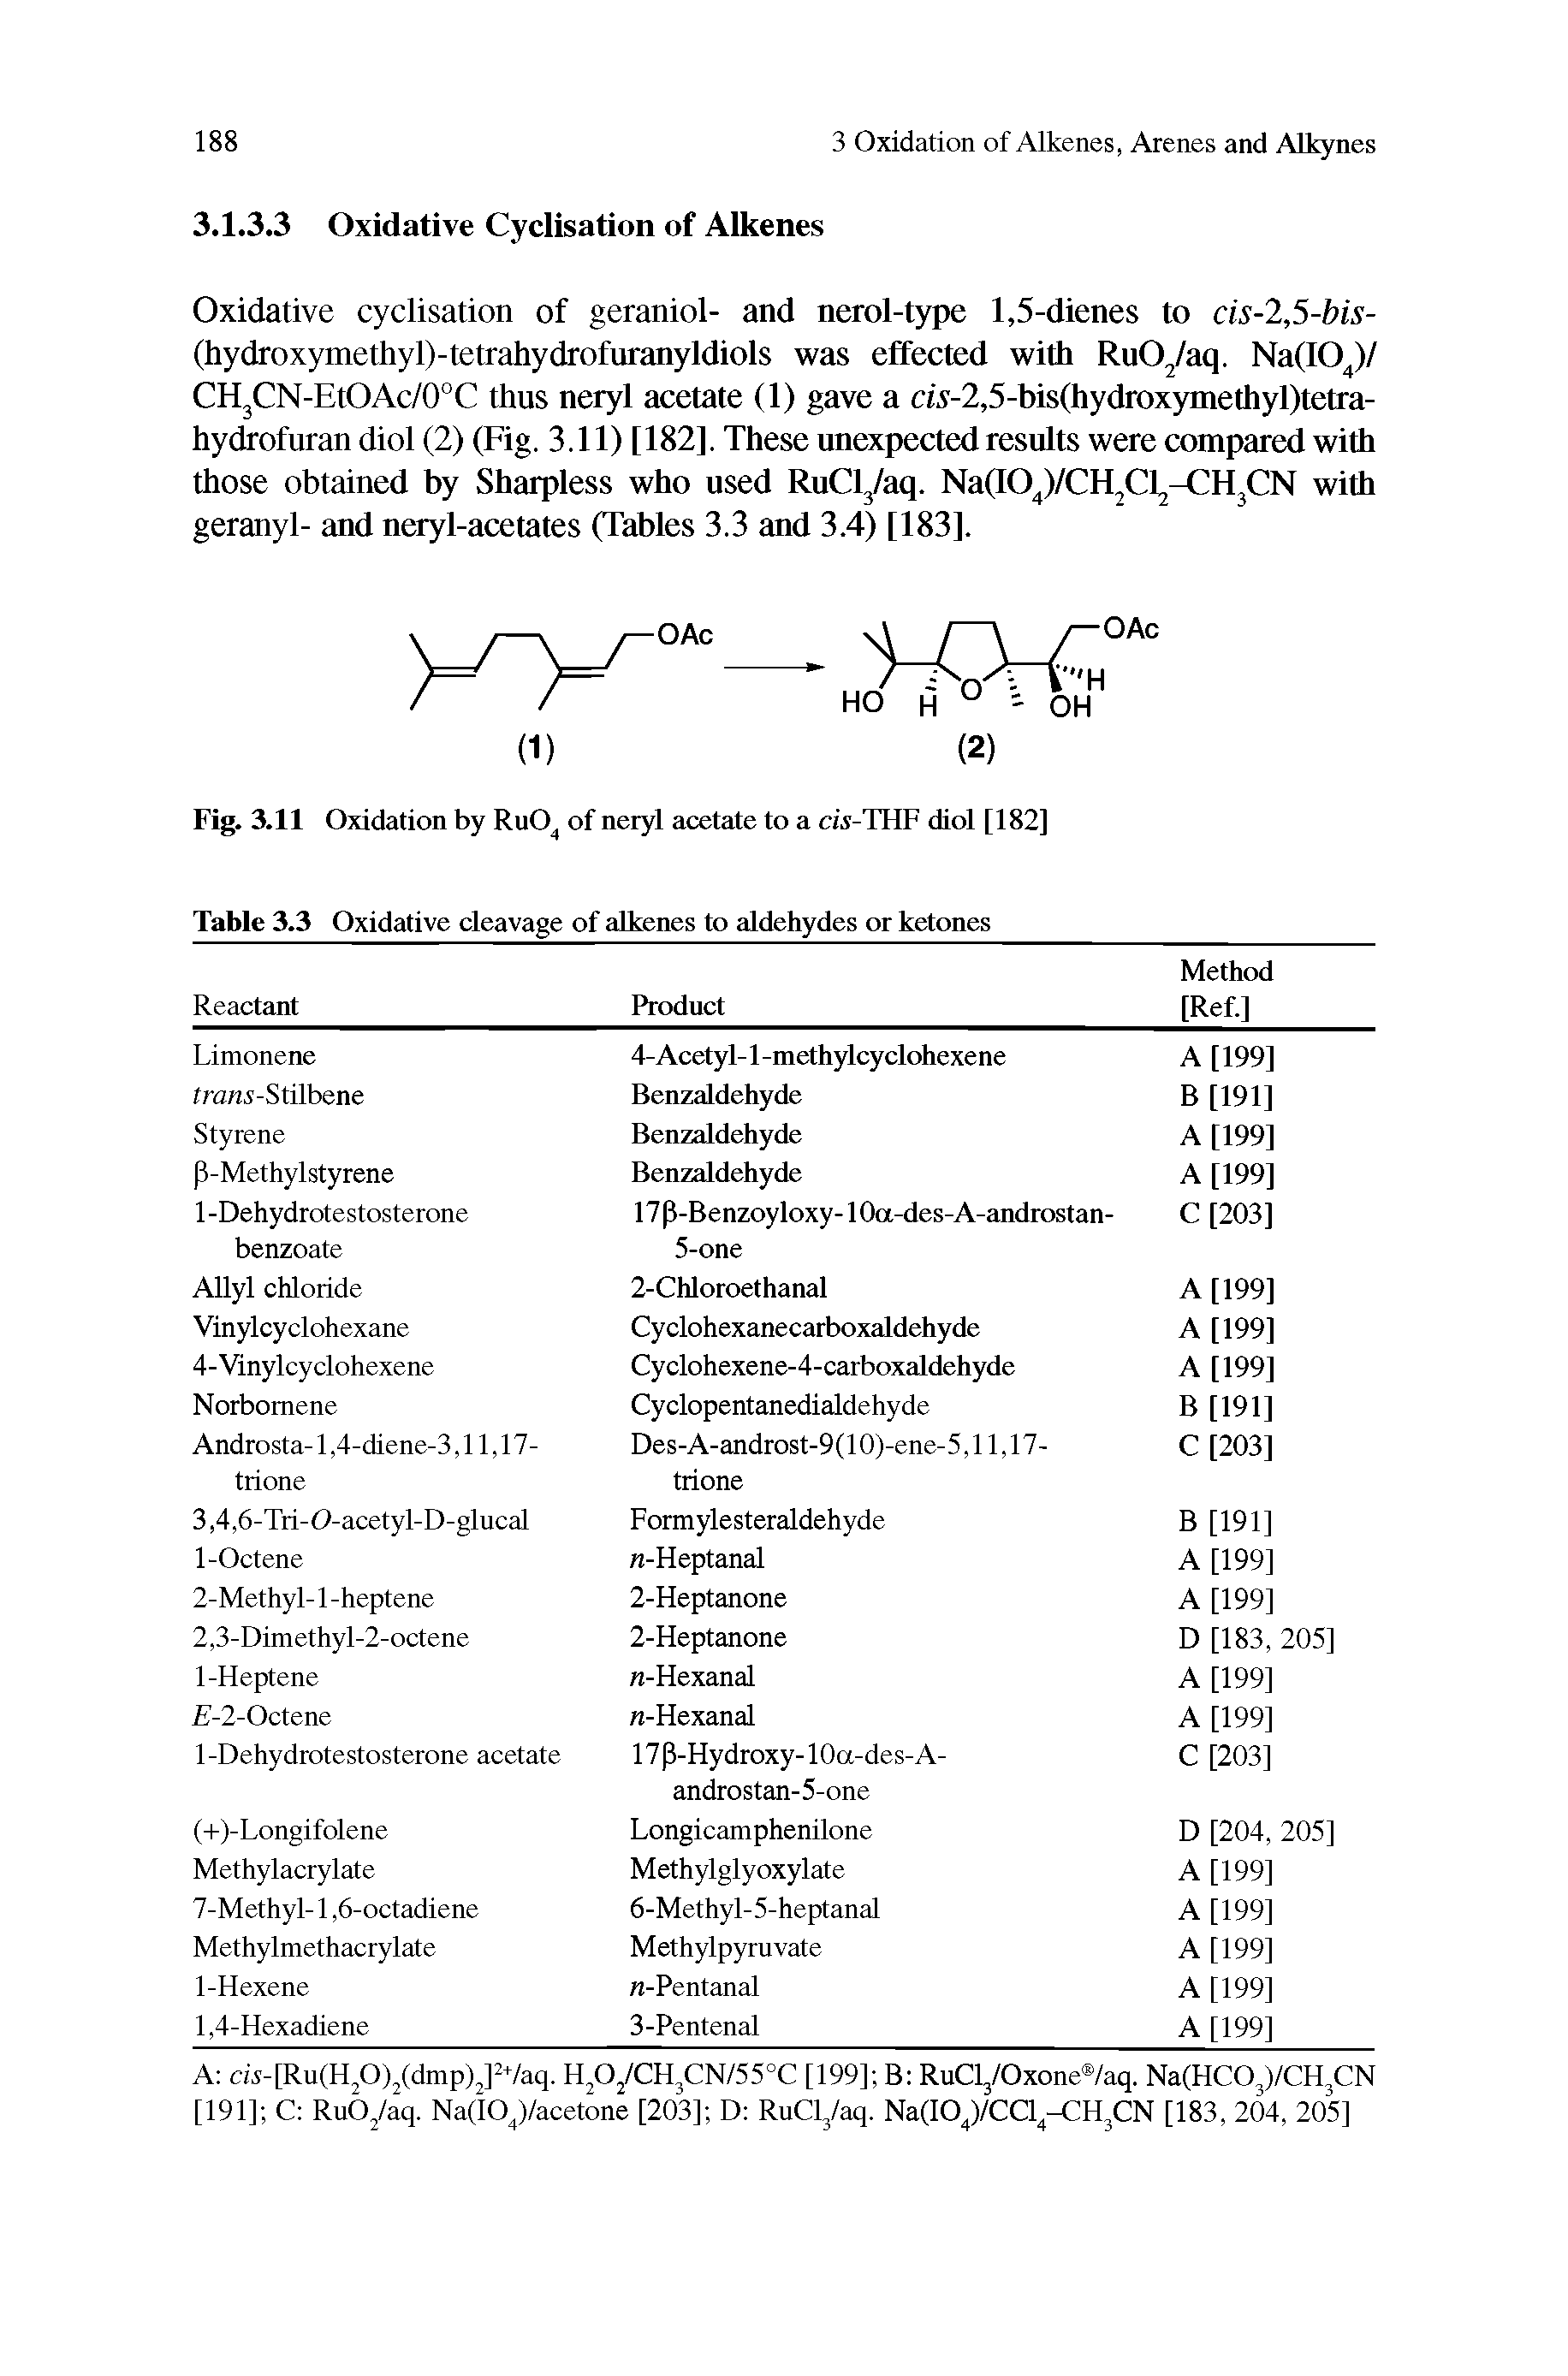 Table 3.3 Oxidative cleavage of alkenes to aldehydes or ketones...